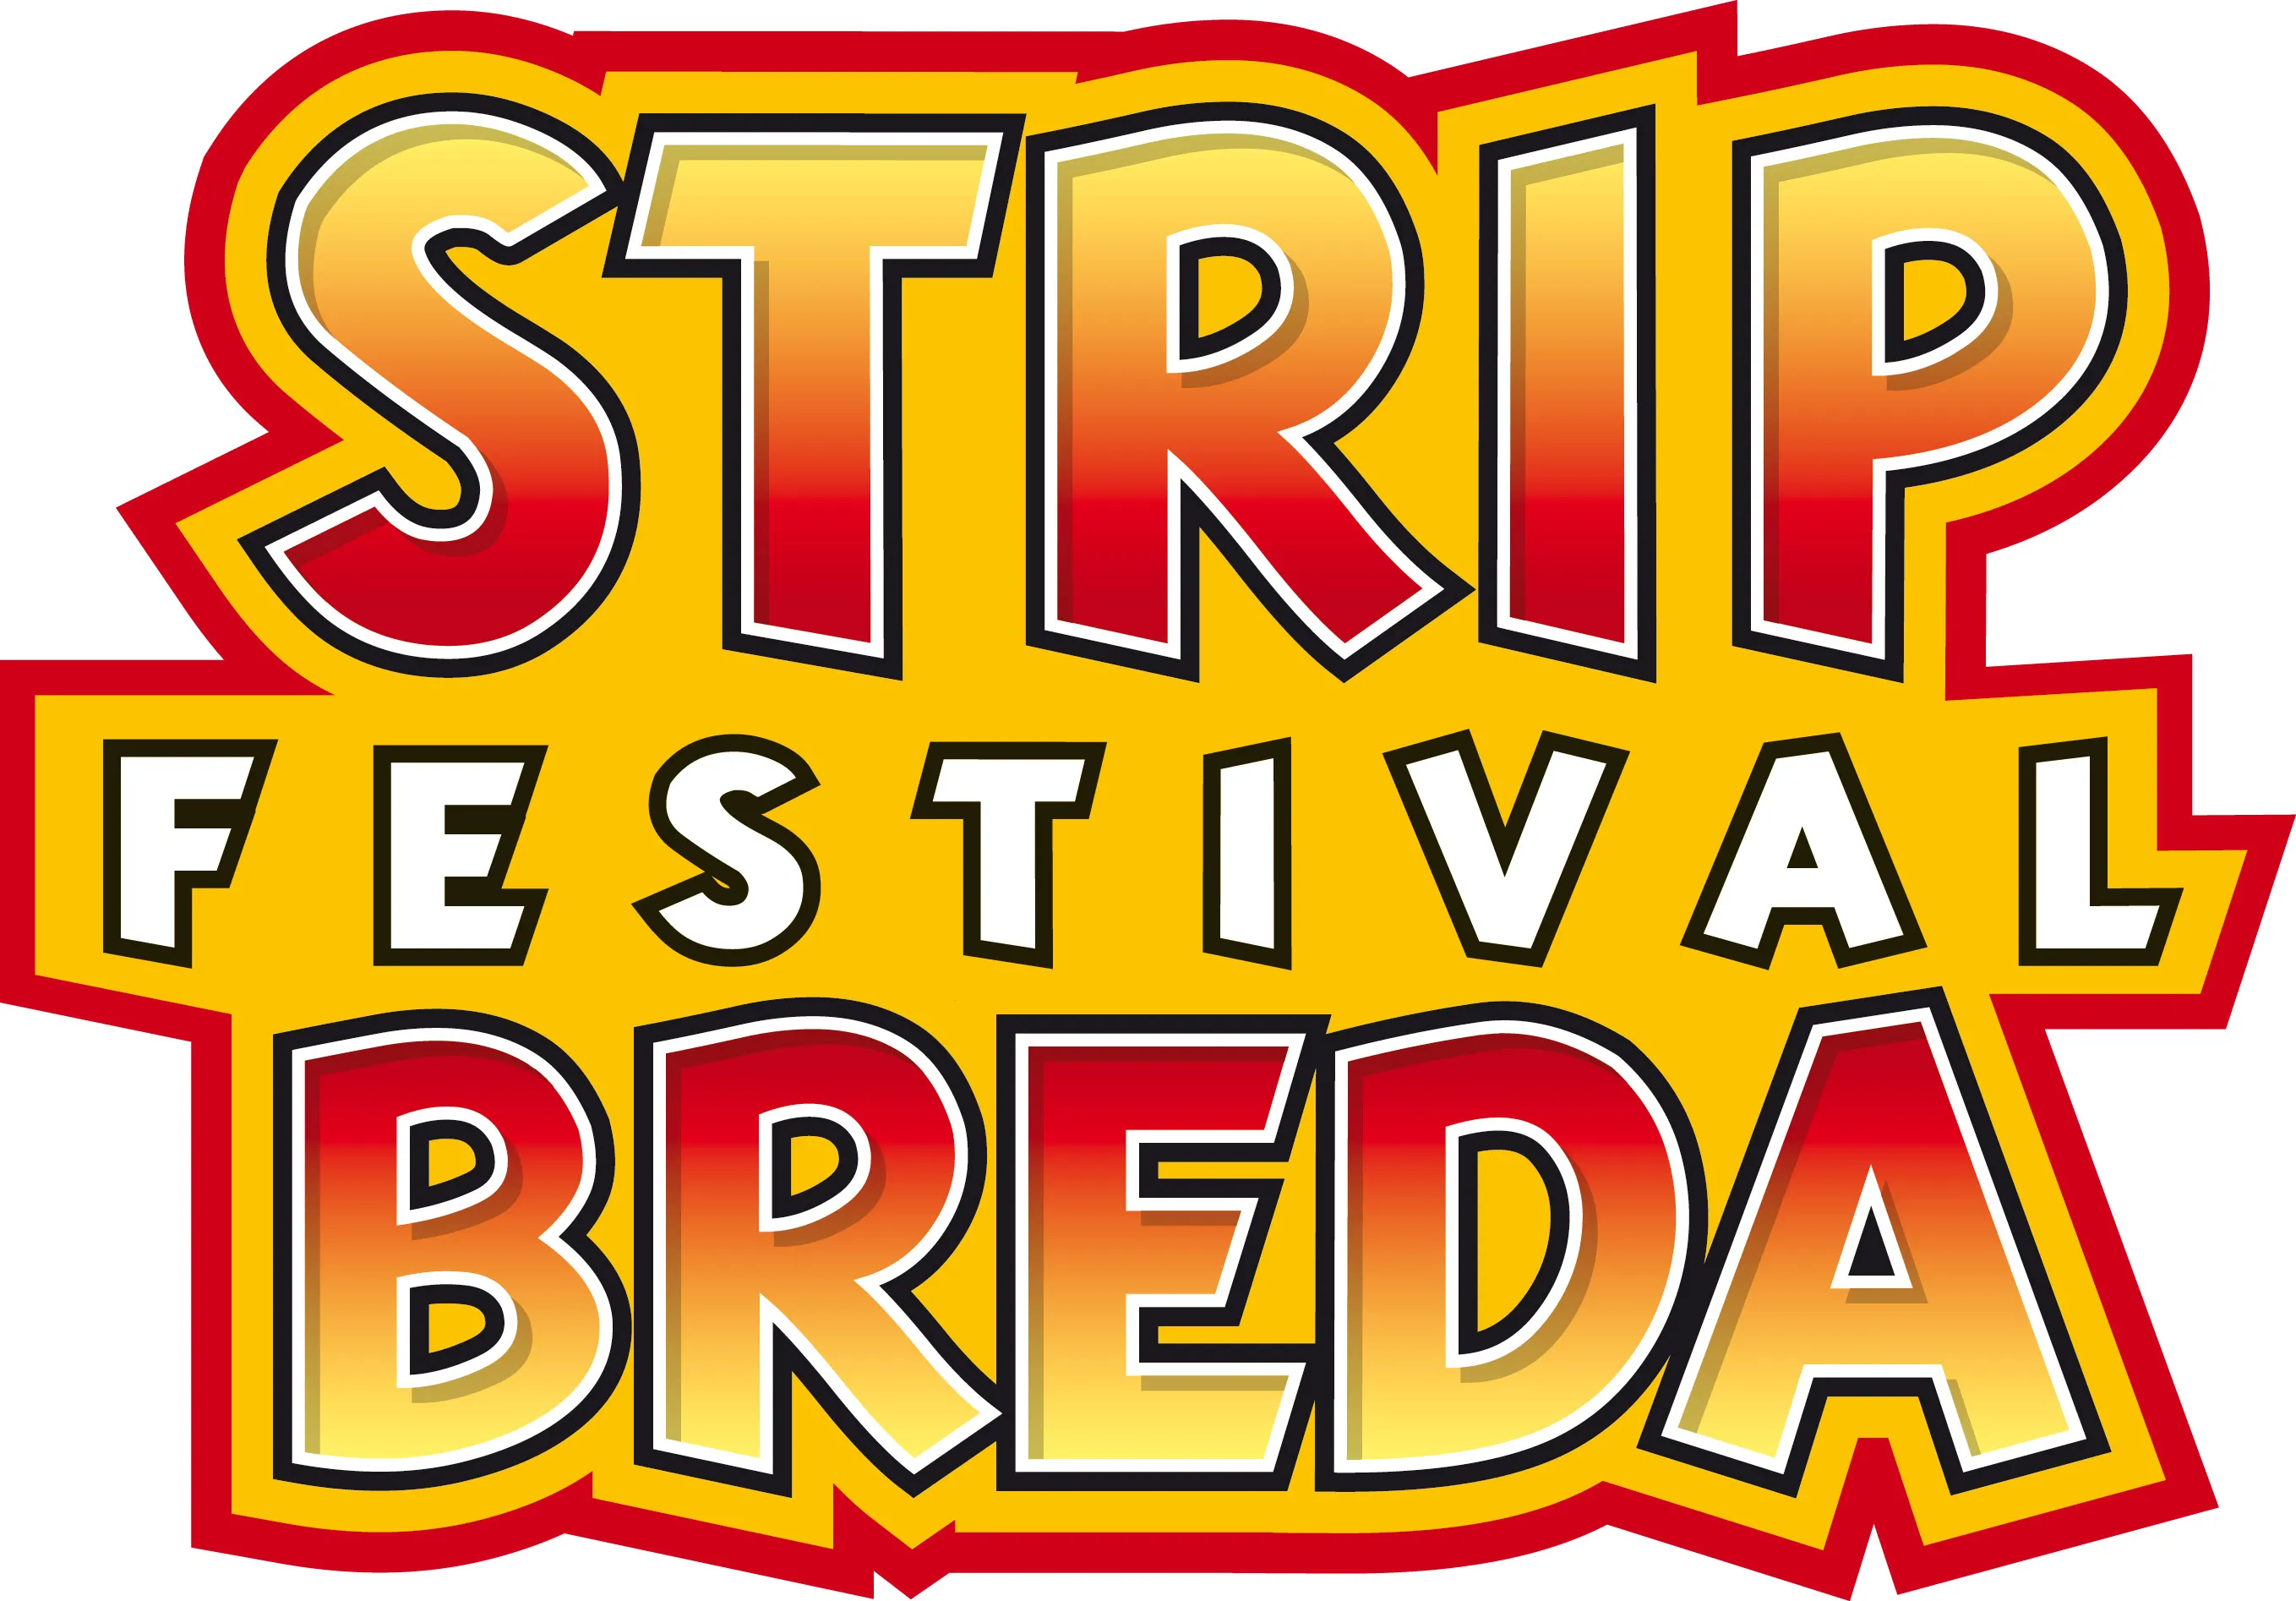 logo stripfestival breda def